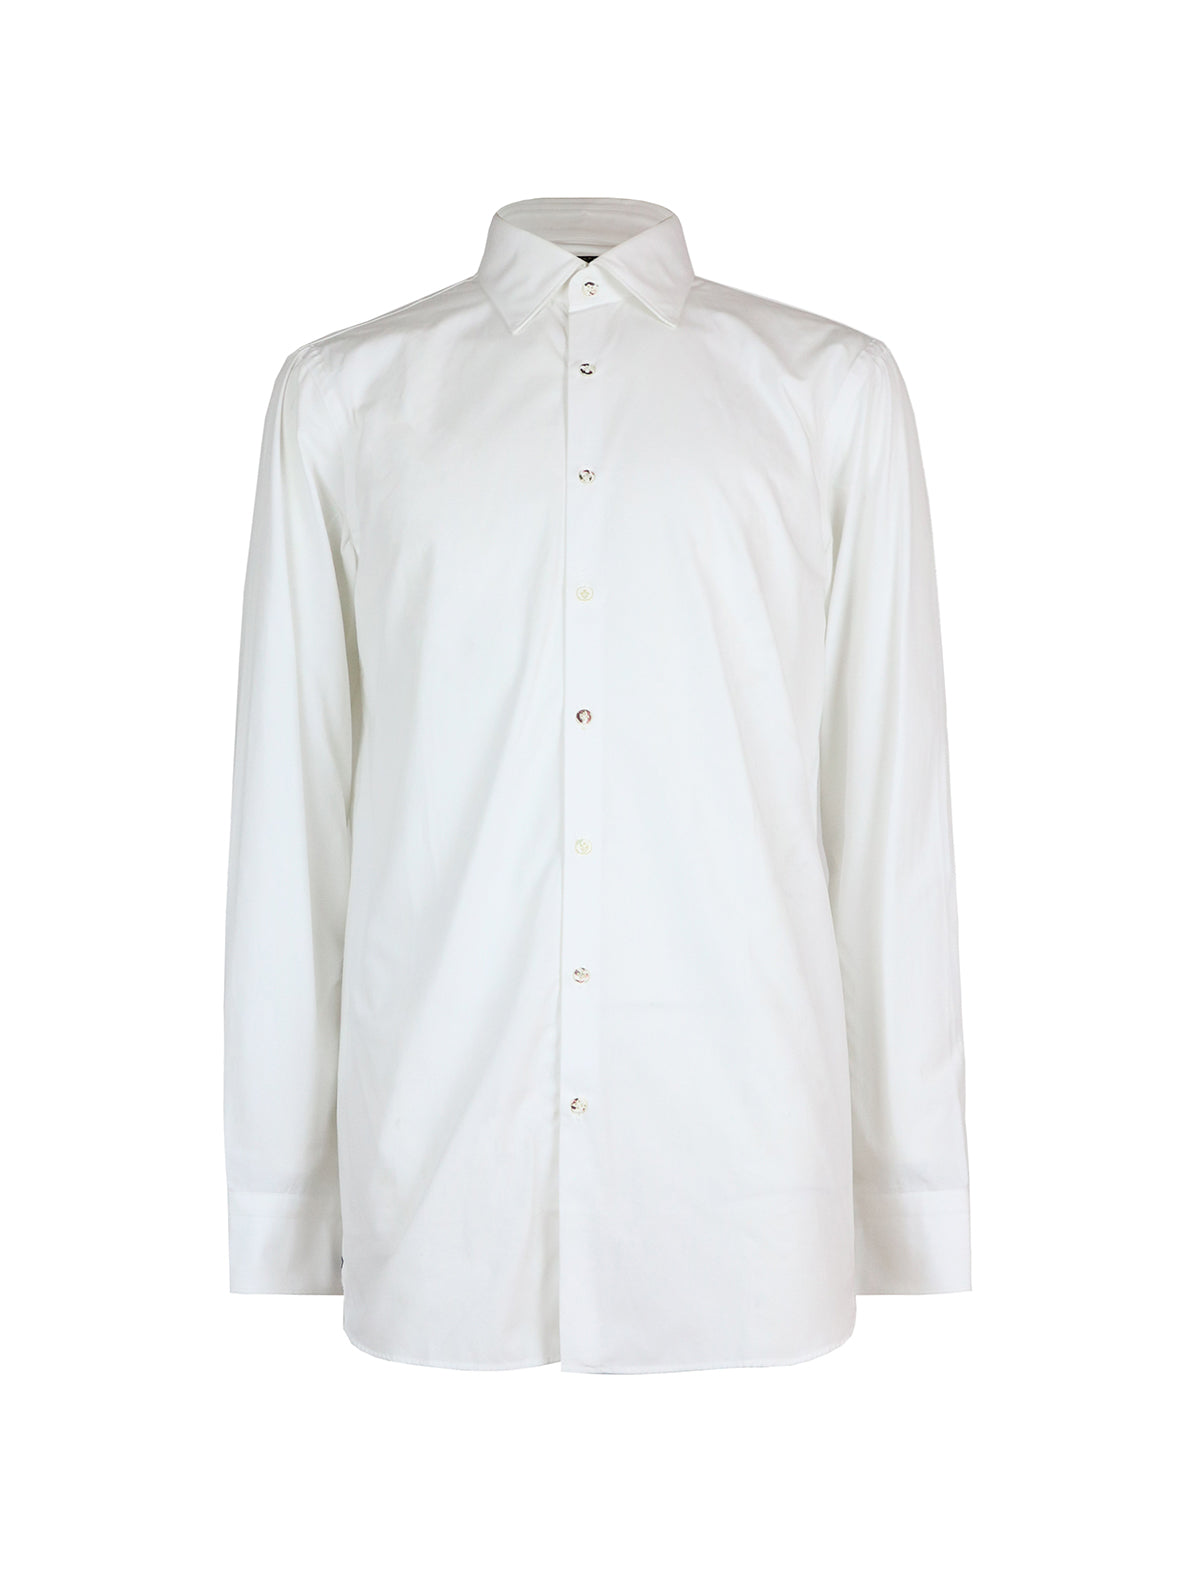 Gabriele Pasini Cotton Shirt in White